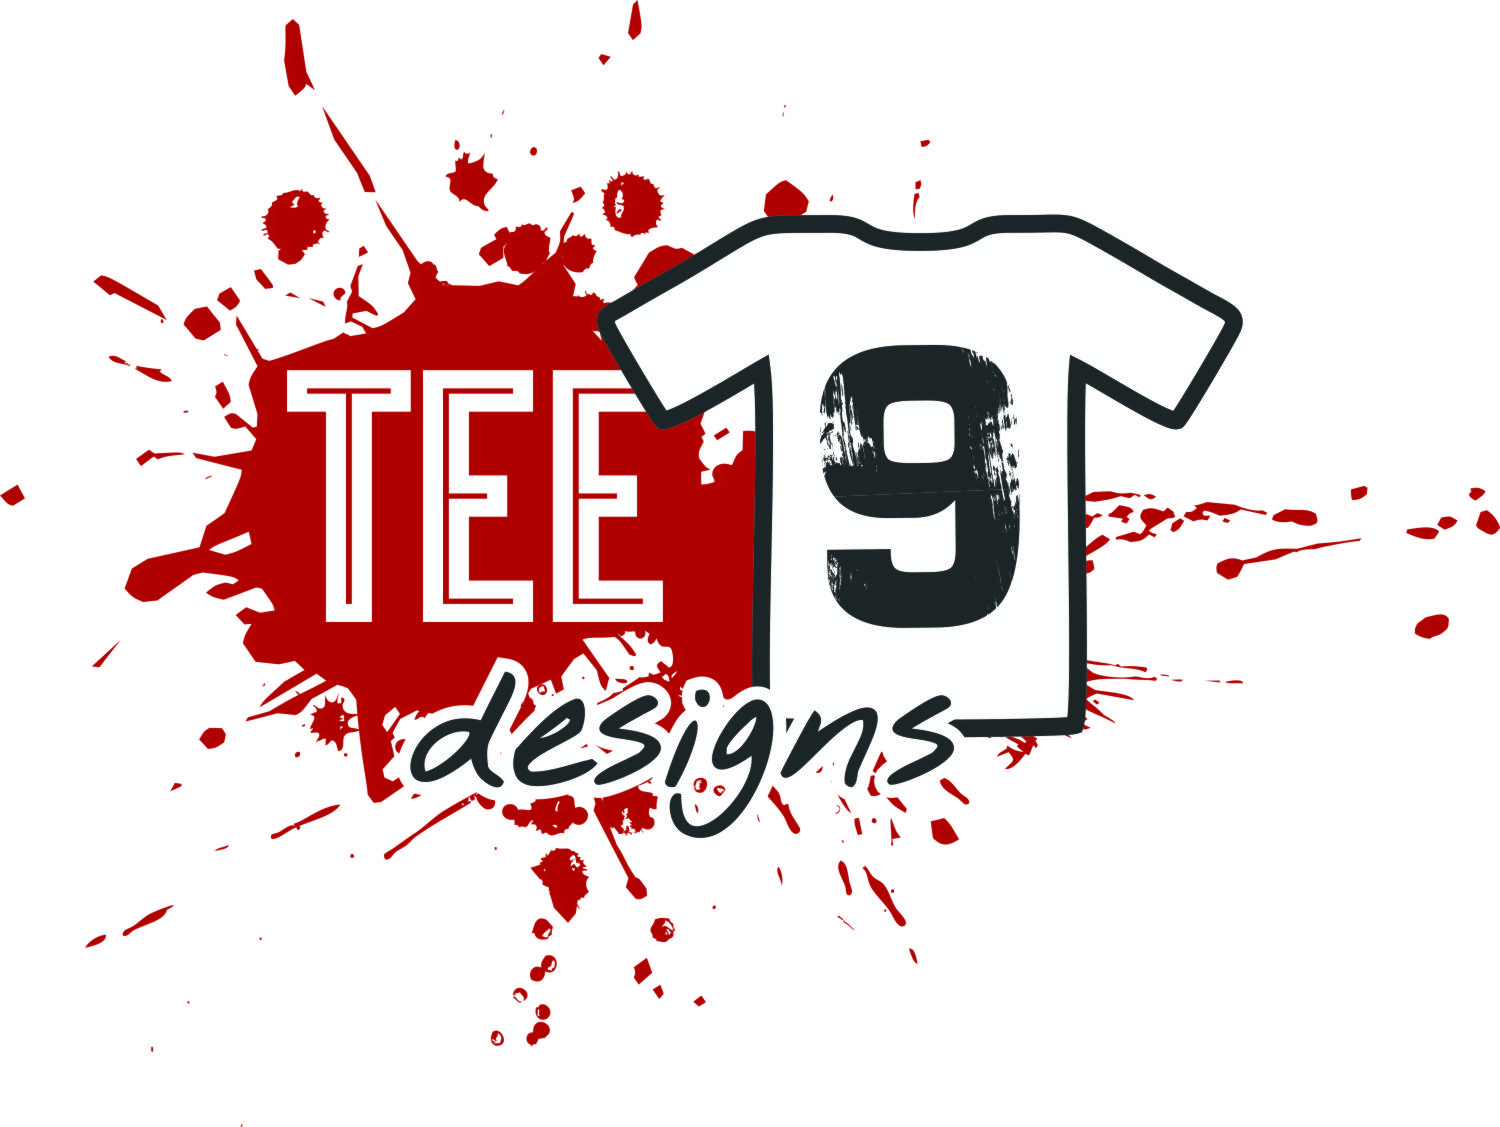 Tee 9 Designs